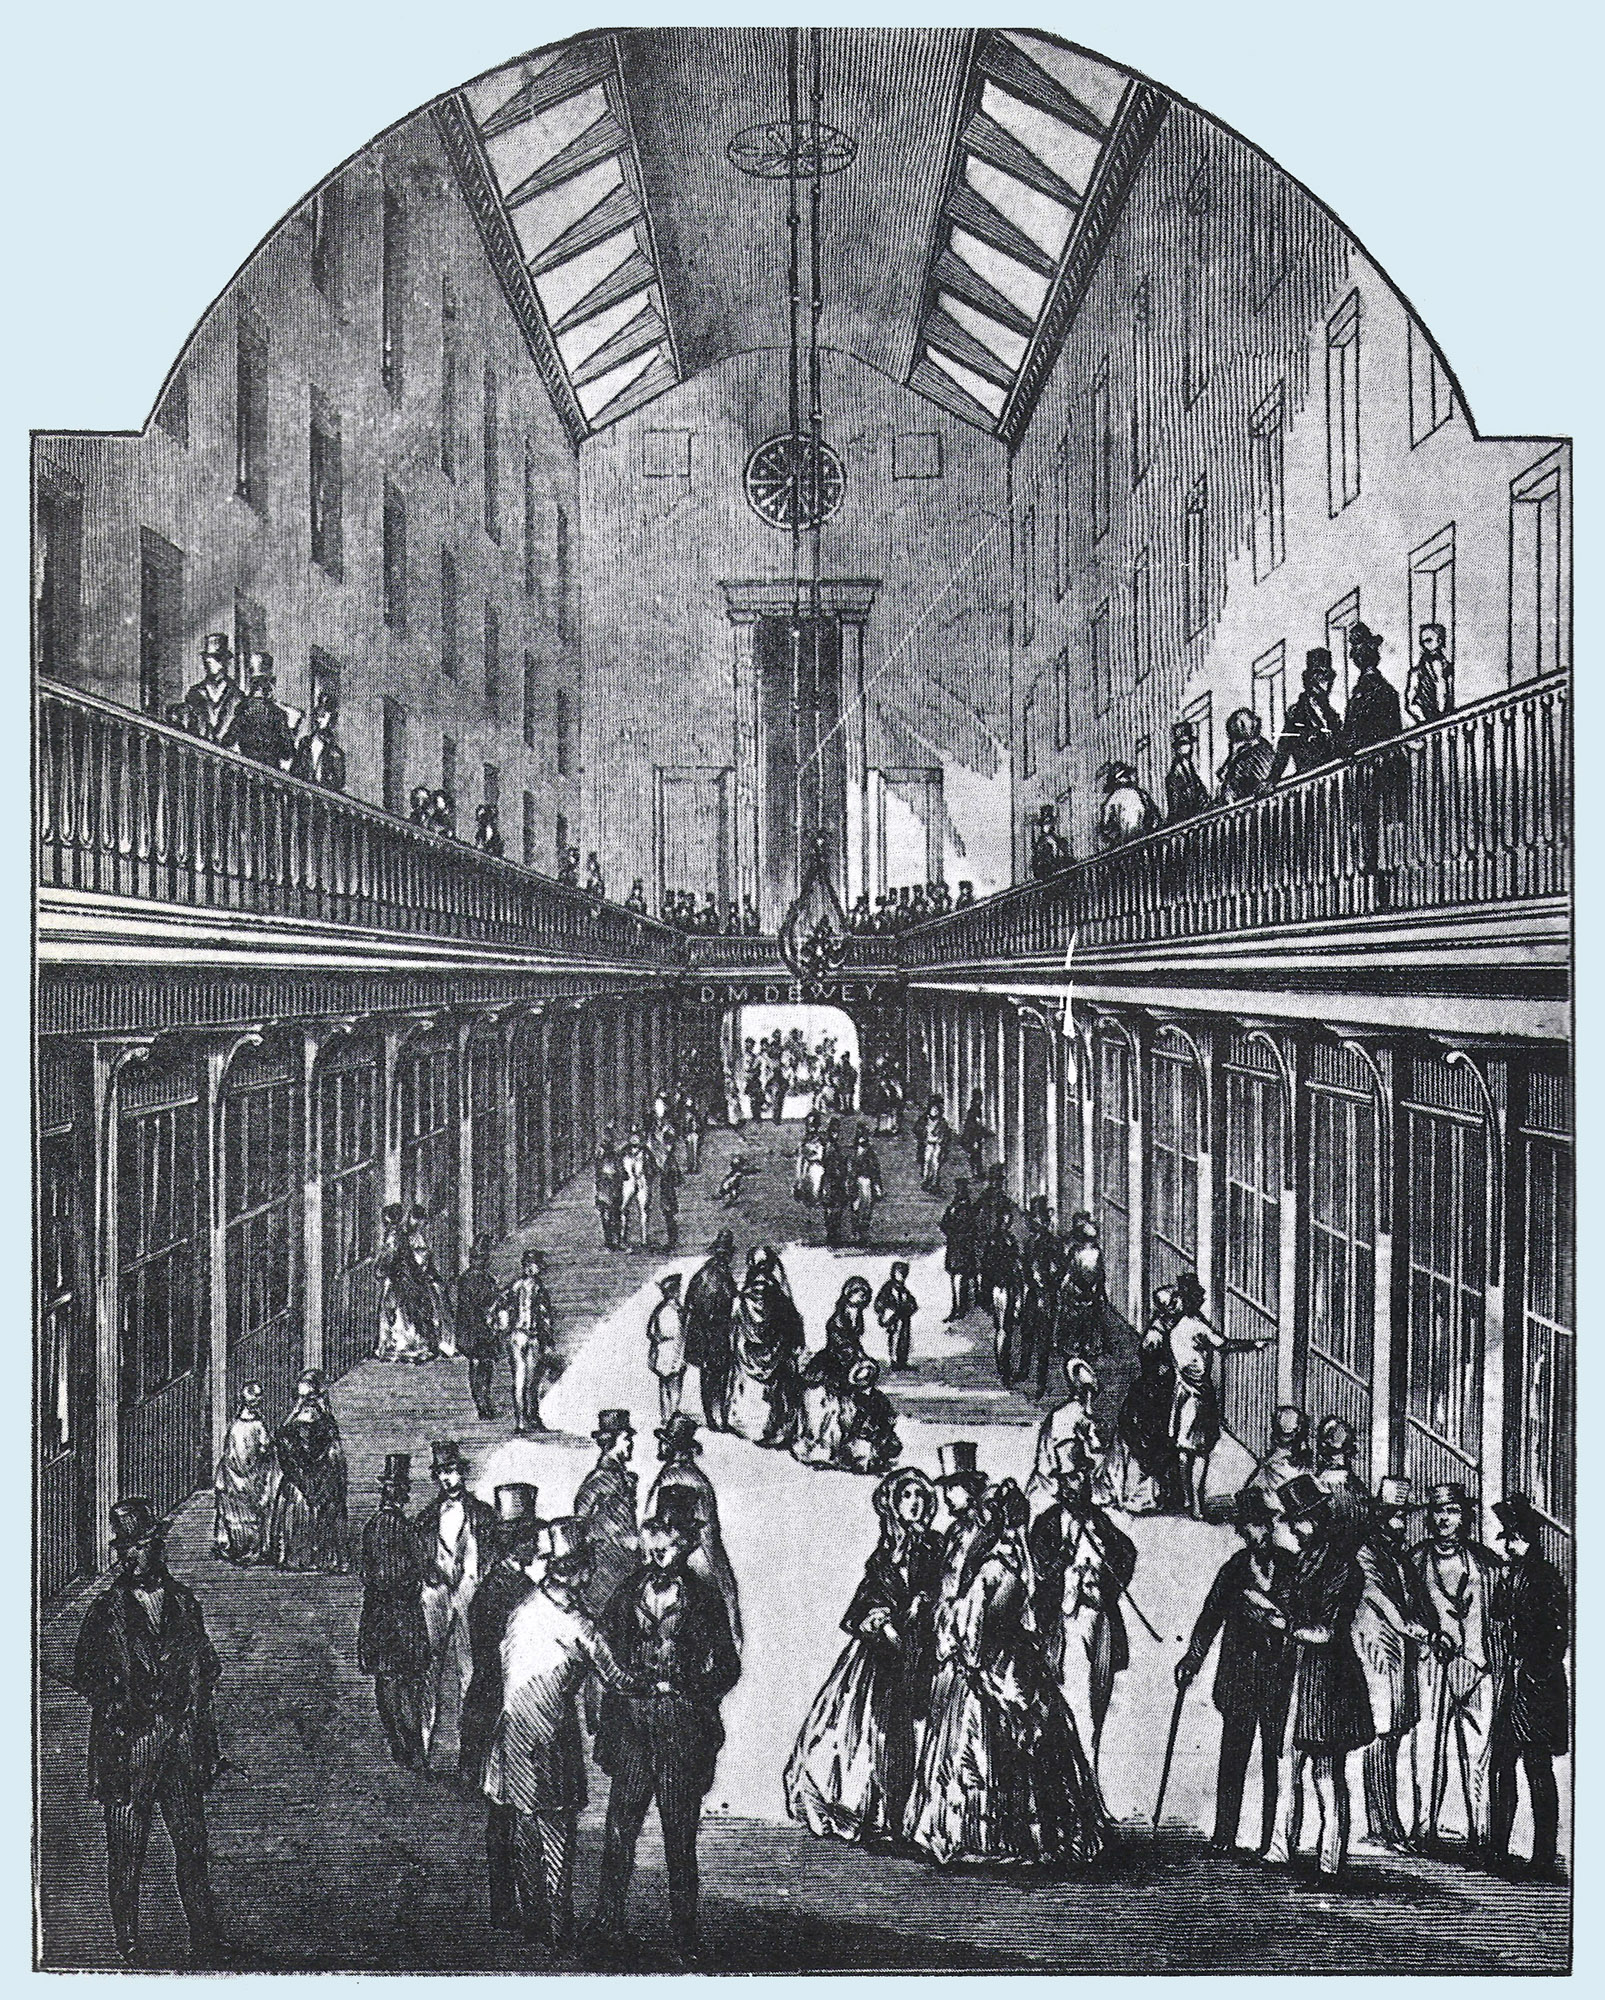 Reynolds Arcade - 1851